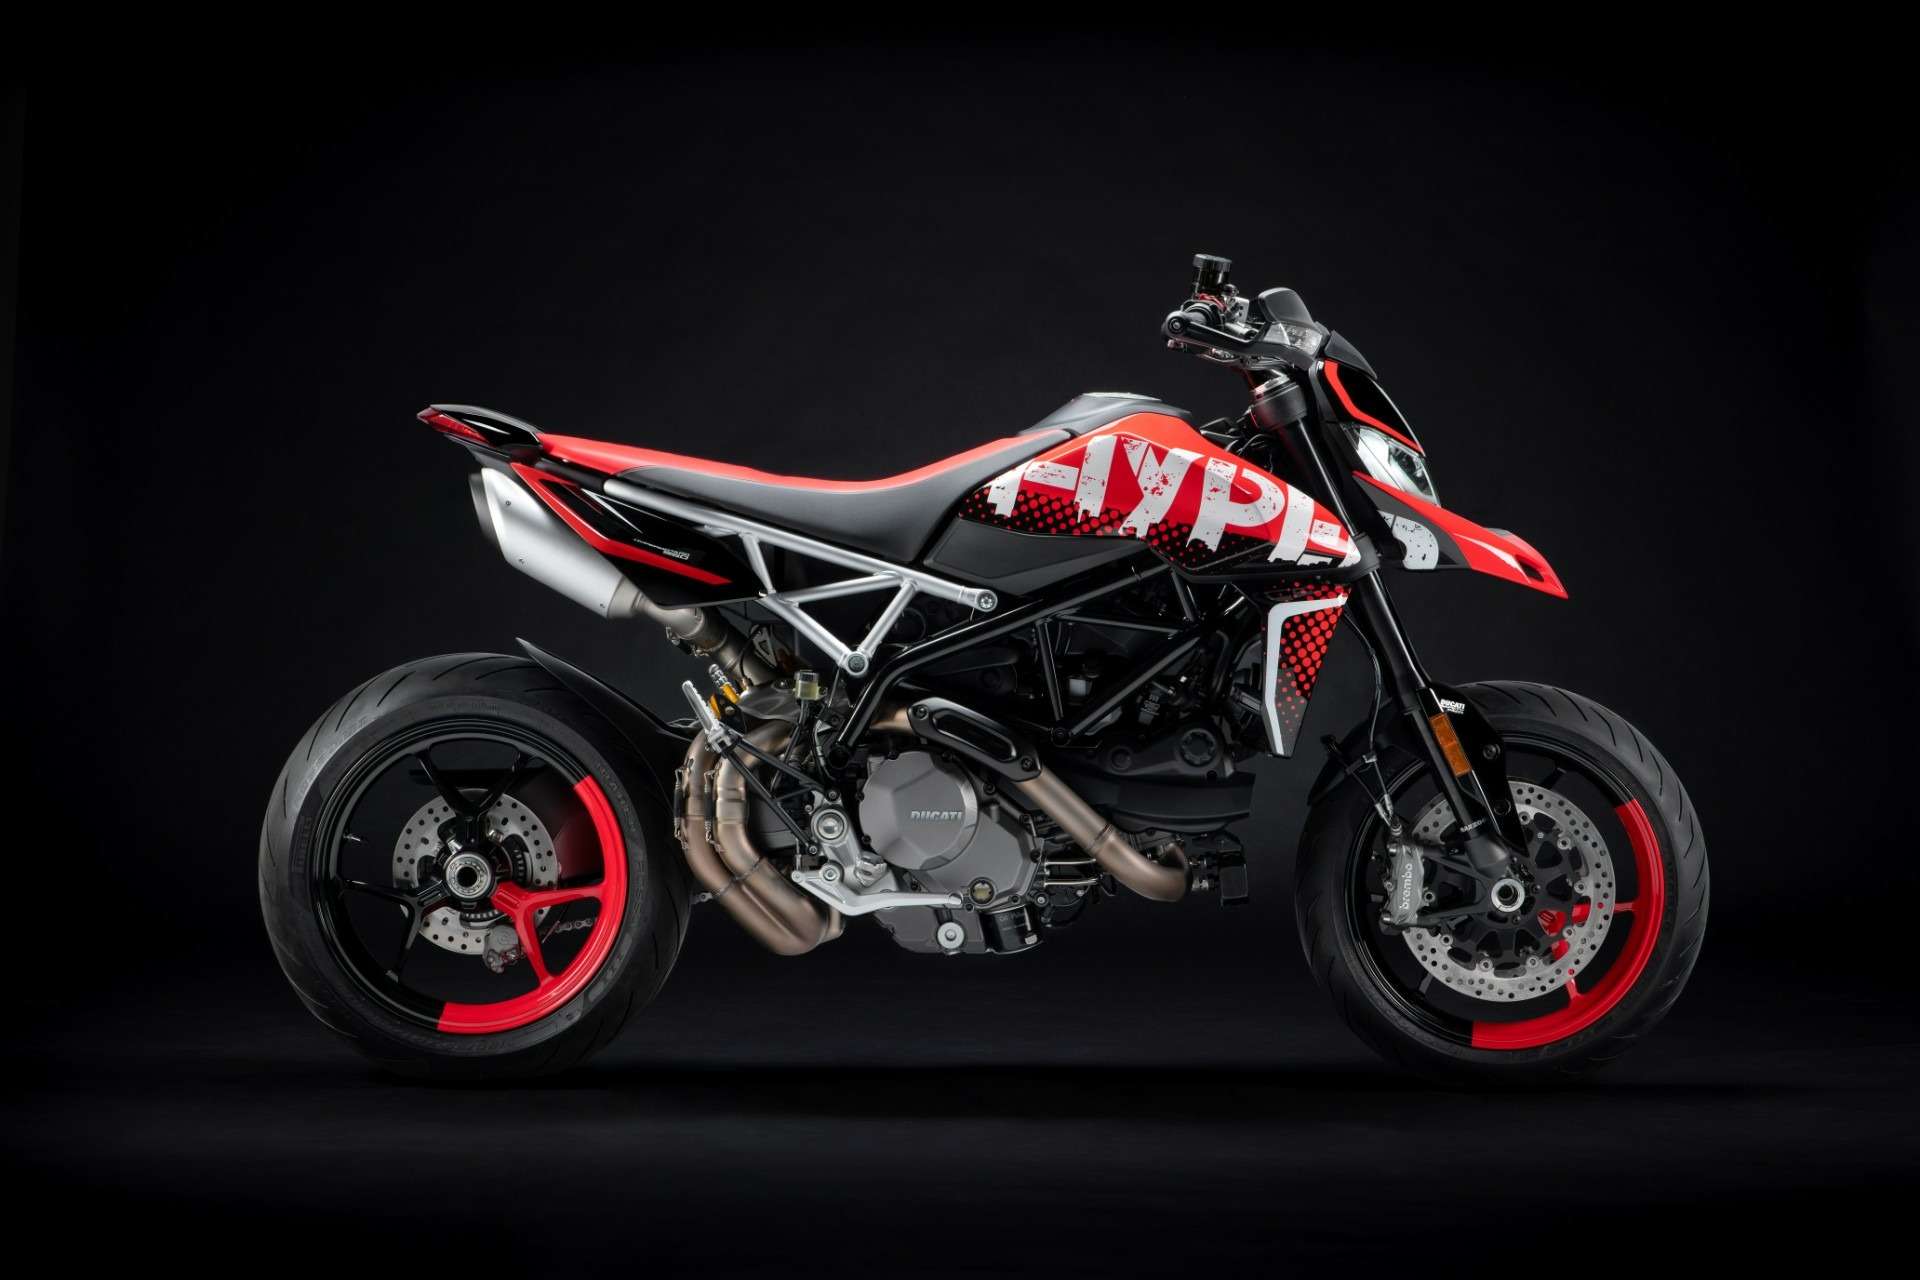 Ducati показала мотоцикл Hypermotard в варианте 950 RVE - фото 1141064